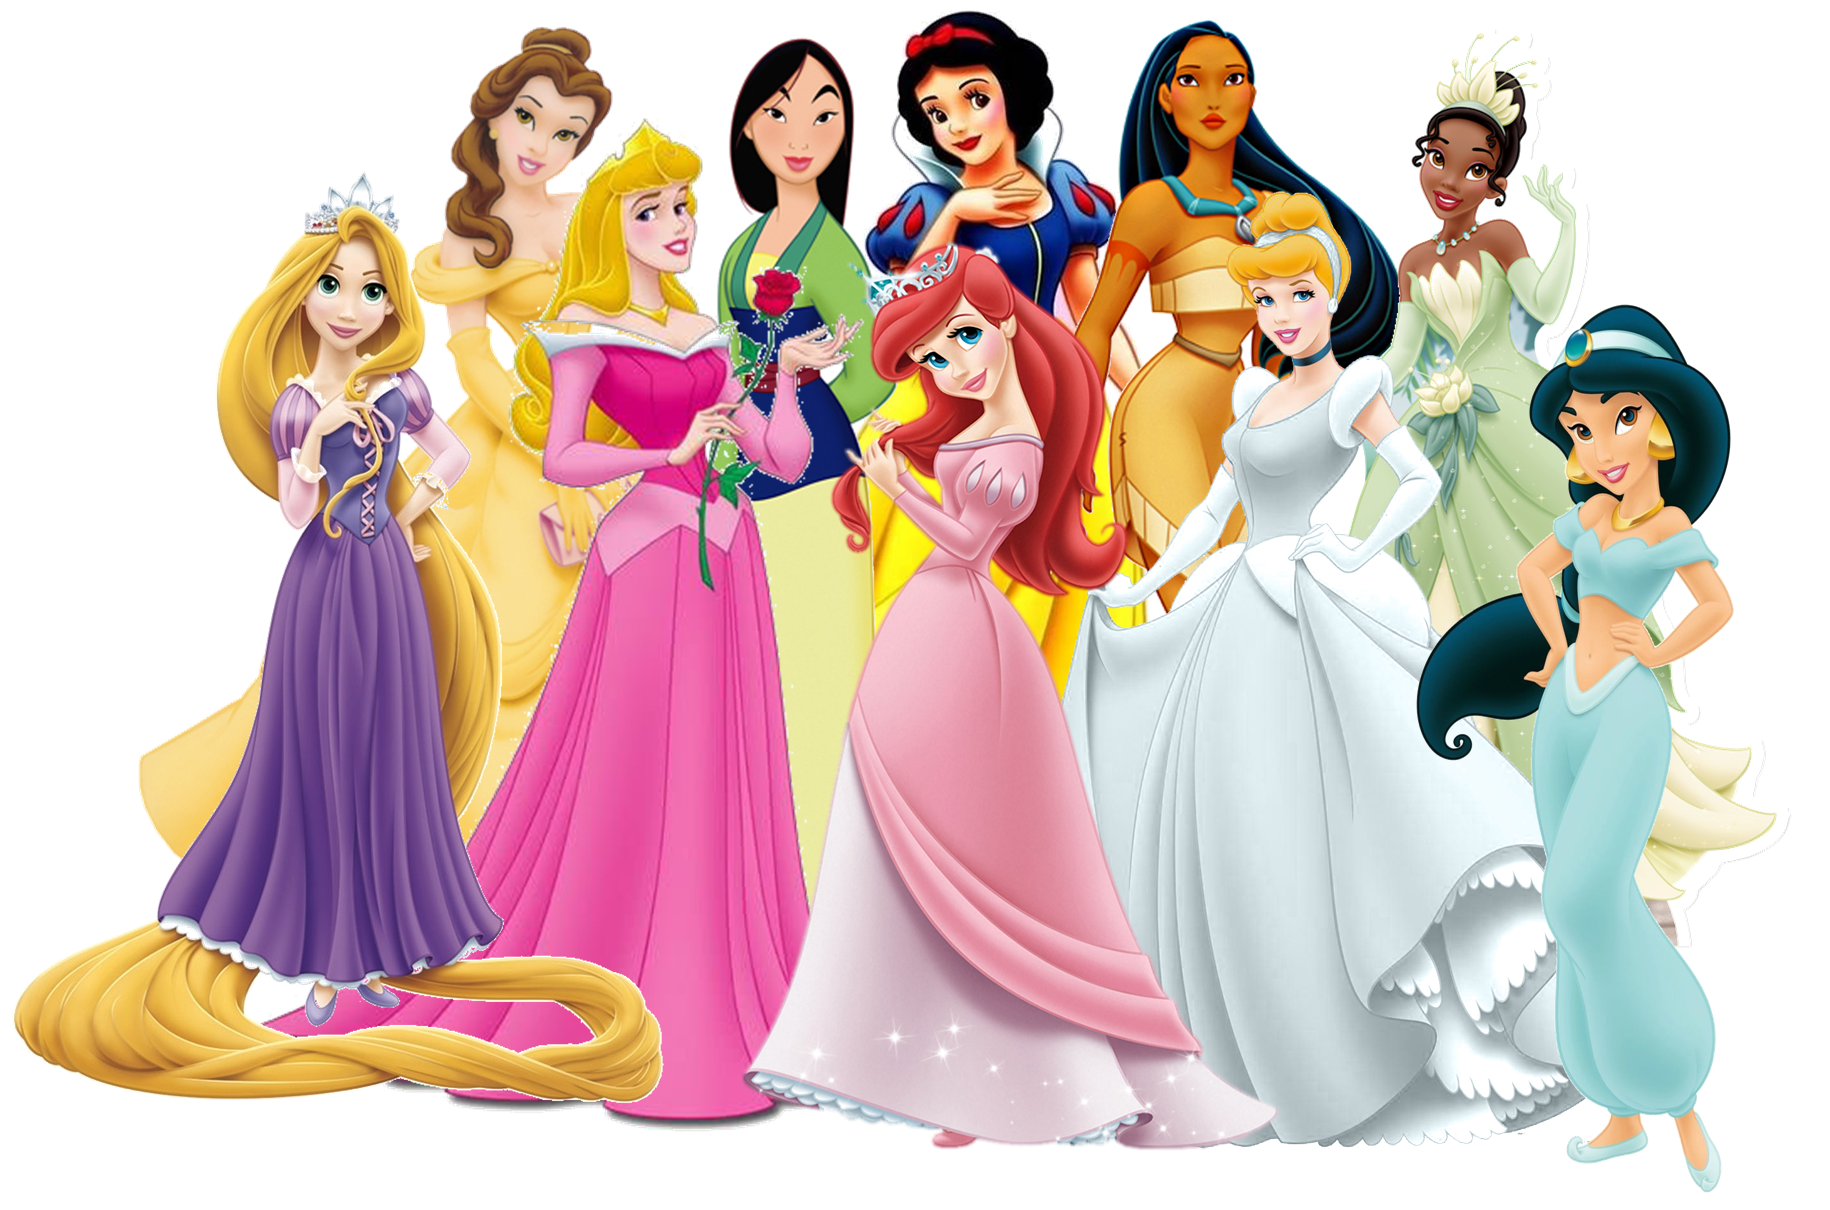 Disney Princess Characters Picture Disney Princess Characters Image 